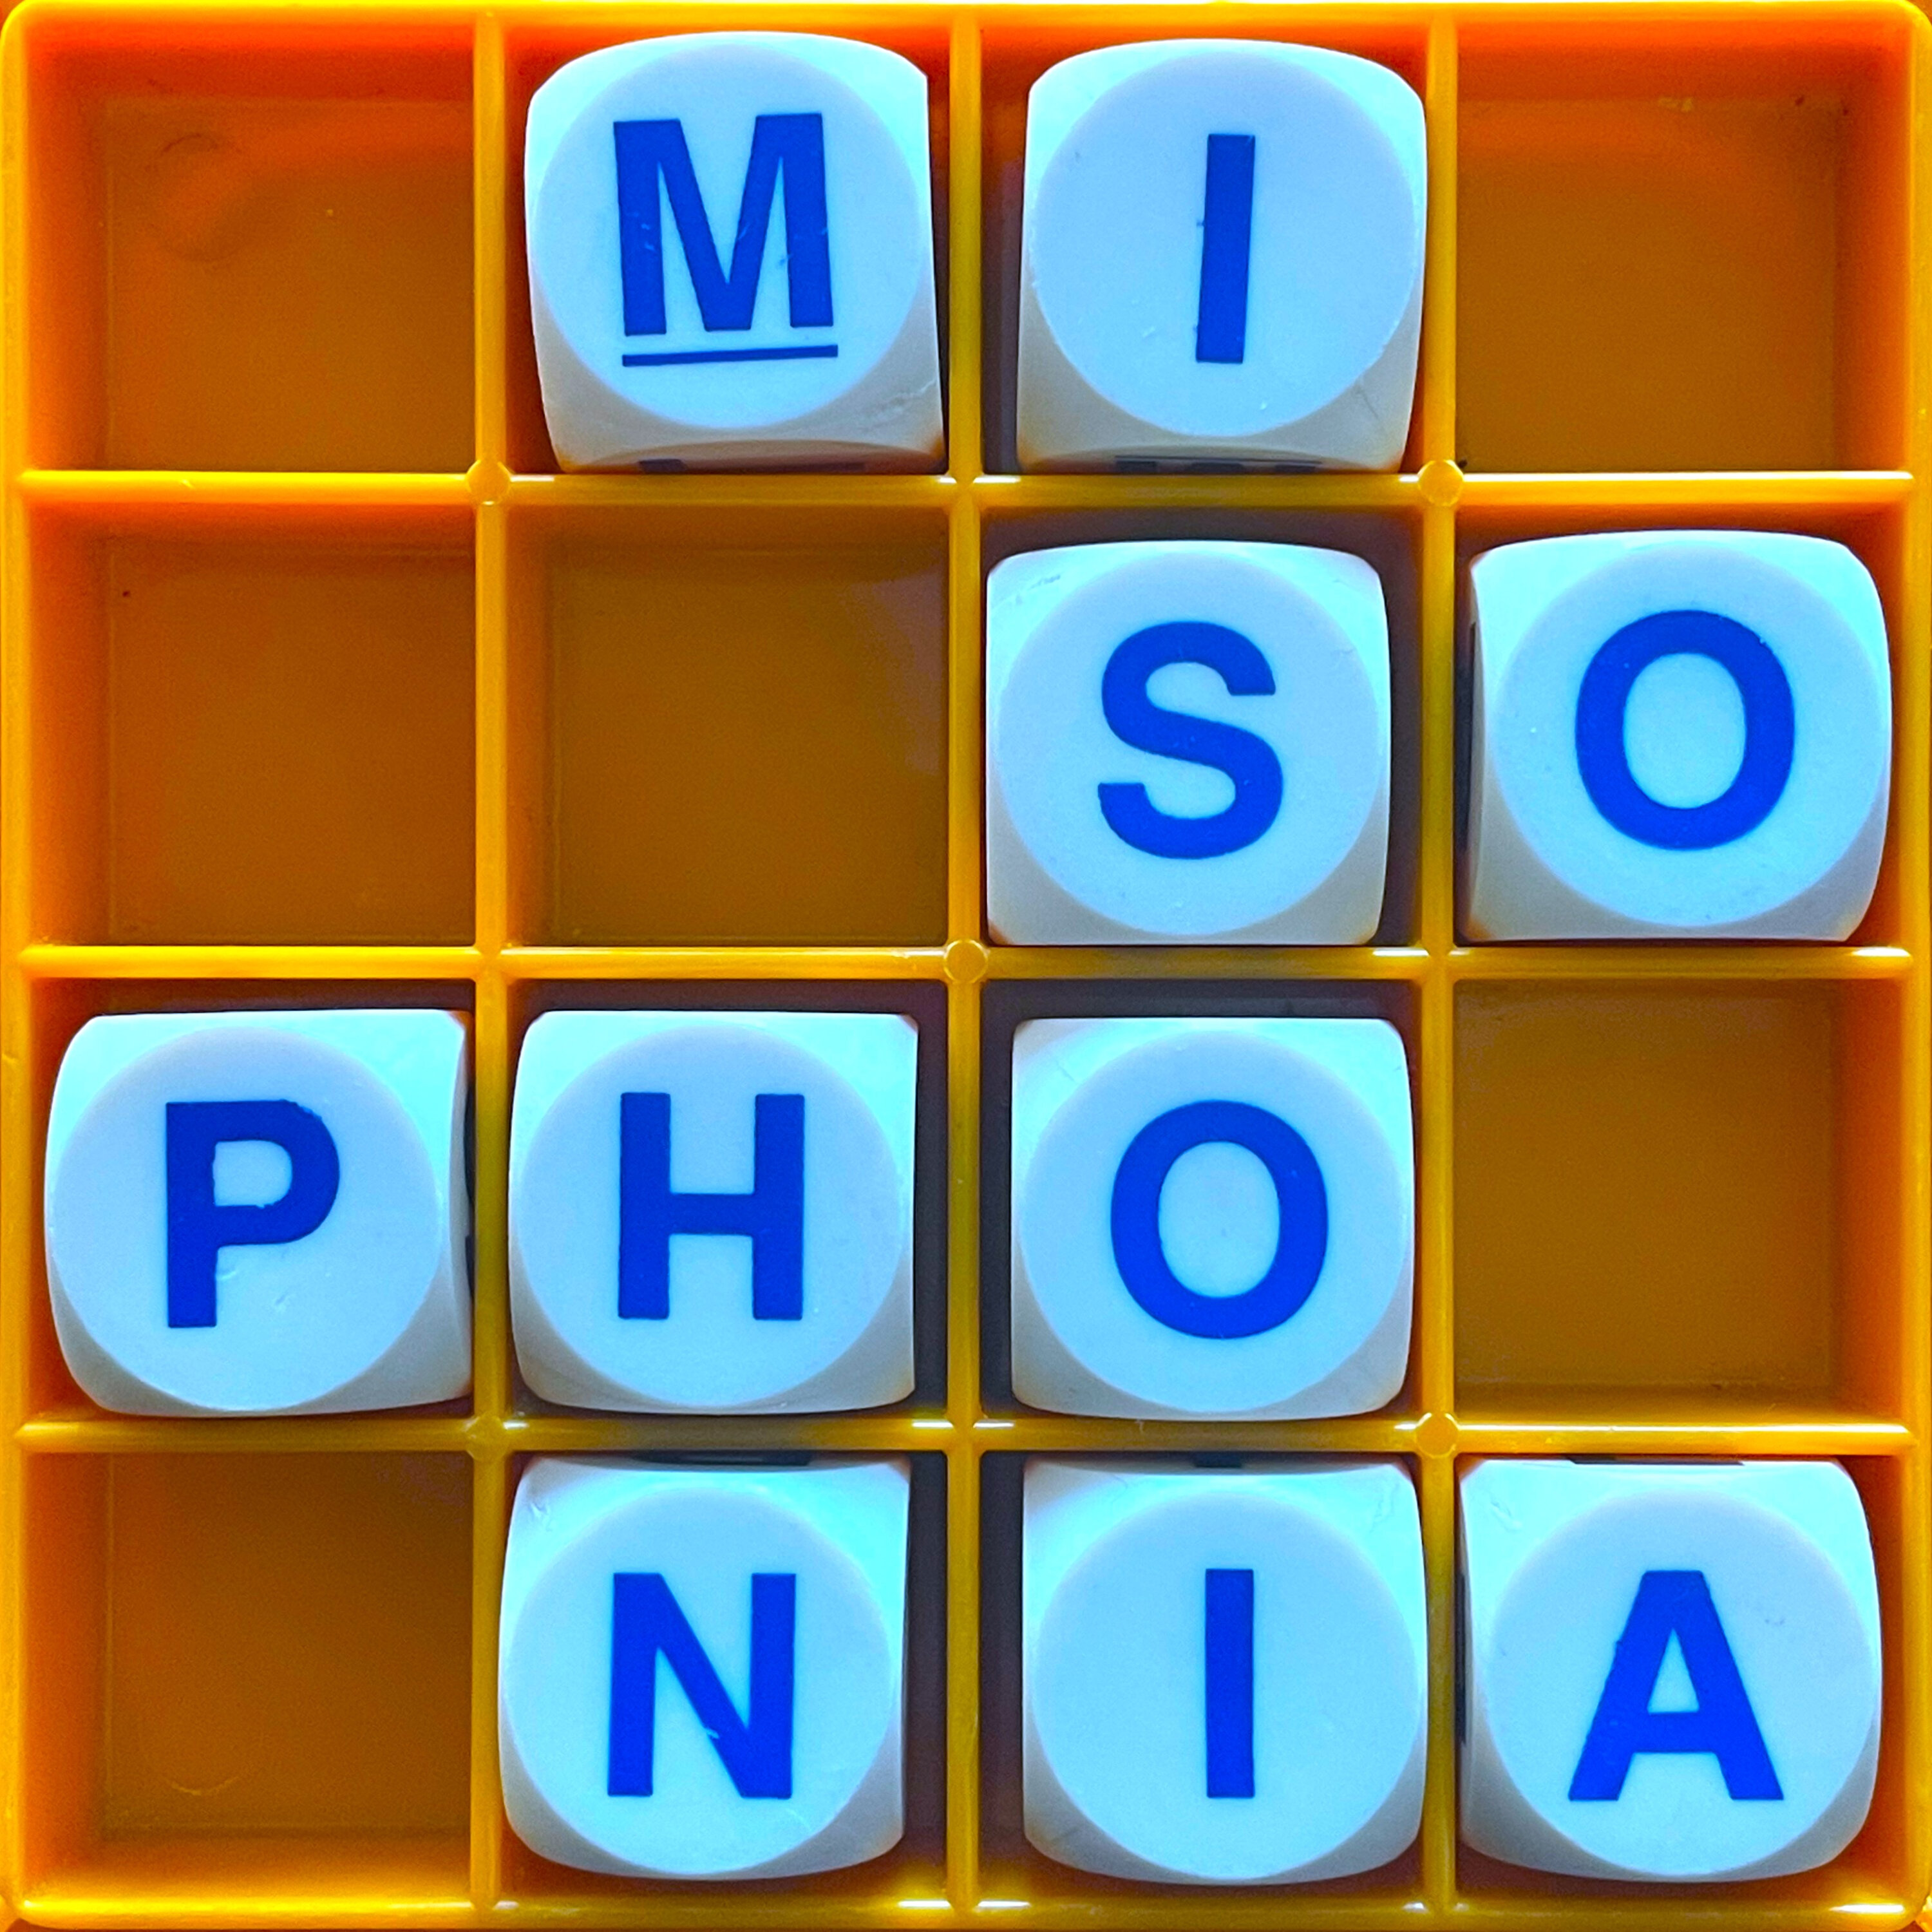 Thumbnail for "184. Misophonia".